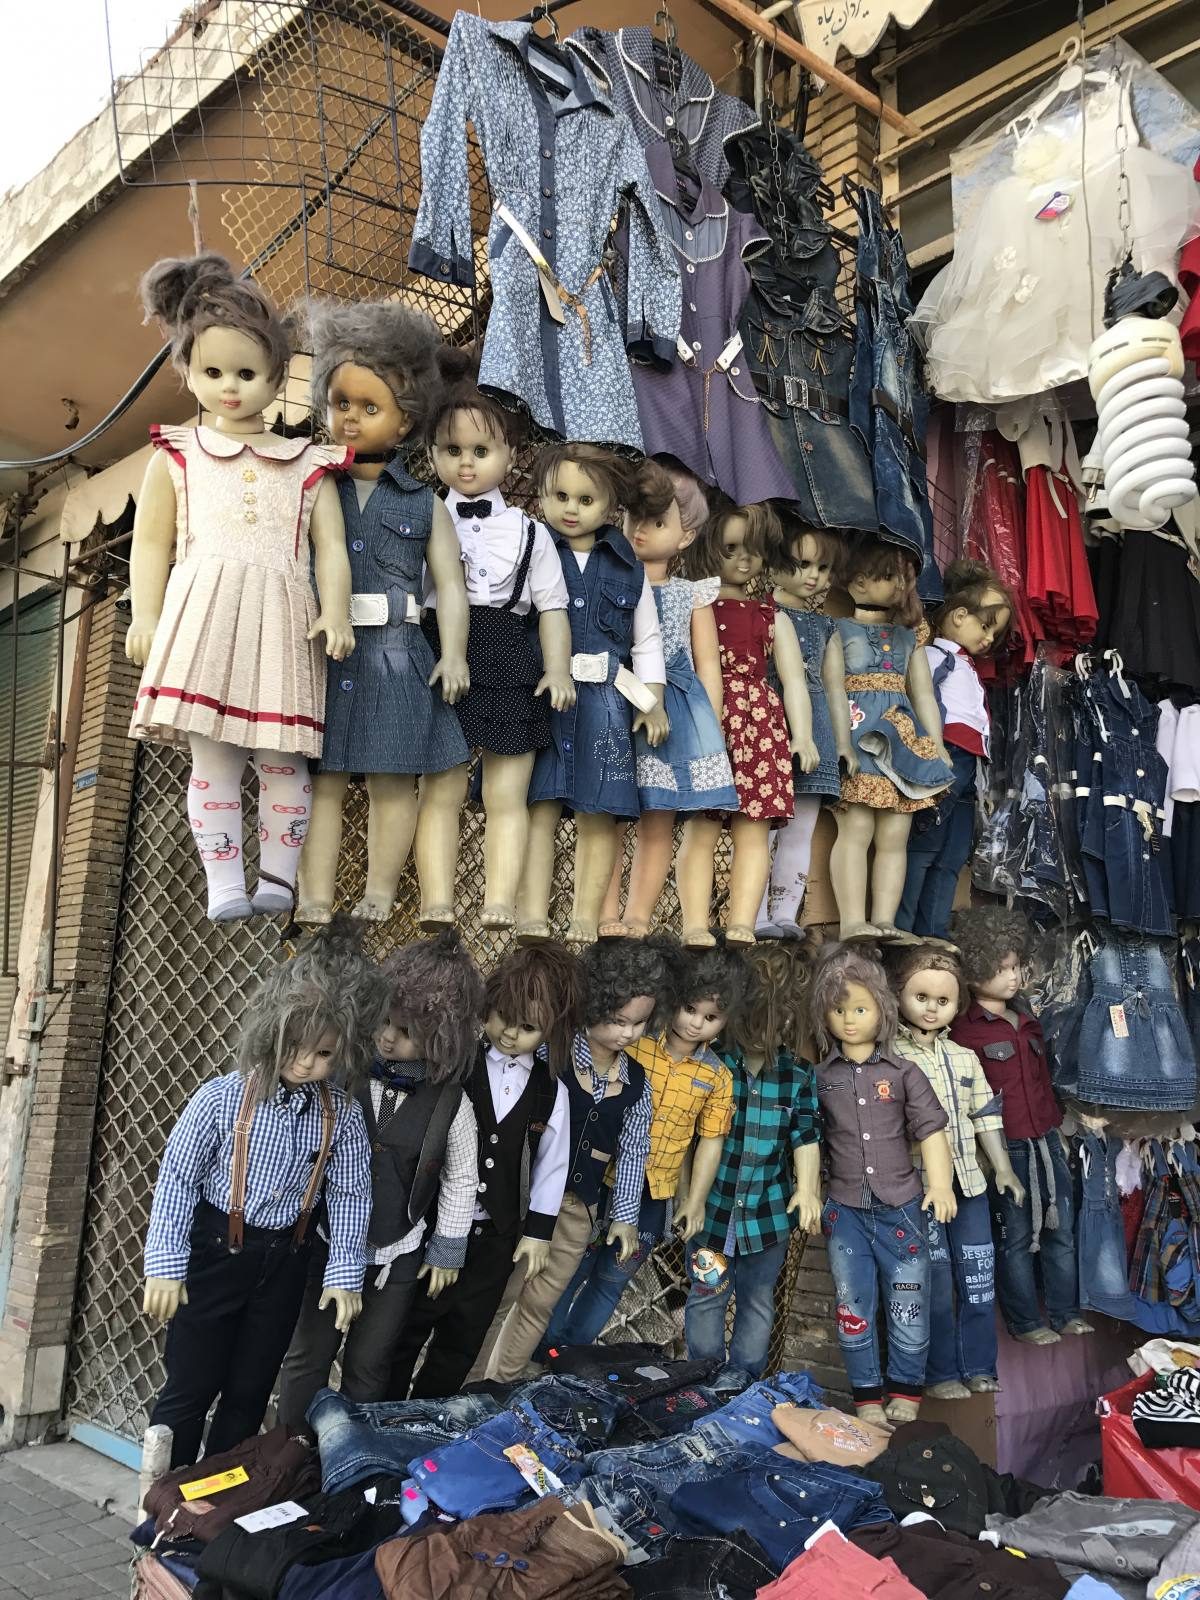 creepy dolls in Iran